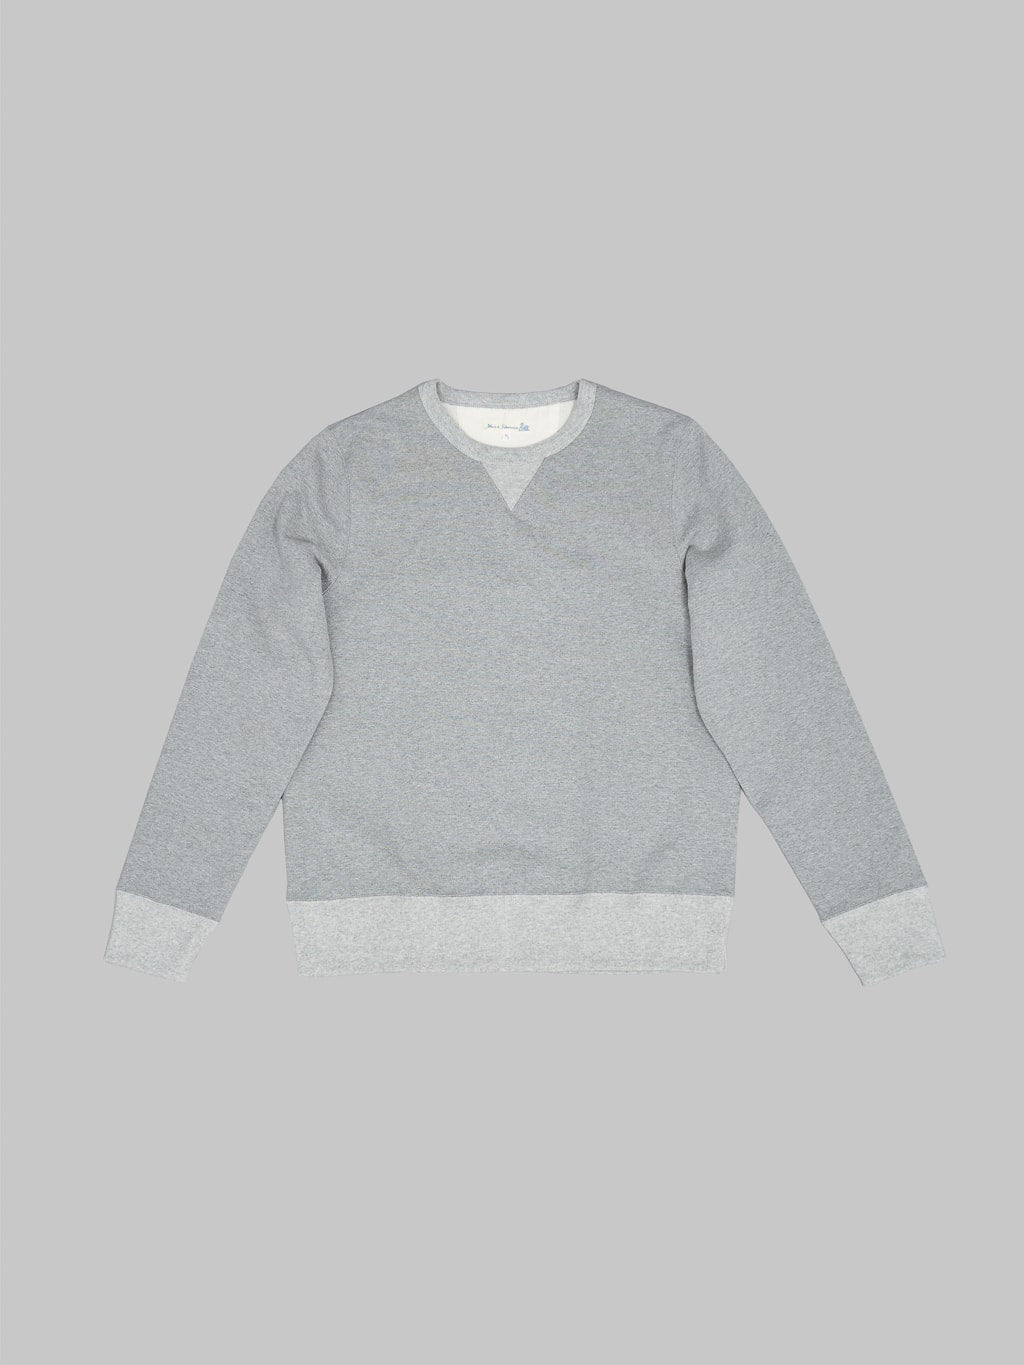 Merz b schwanen loopwheeled sweatshirt heavy grey front view